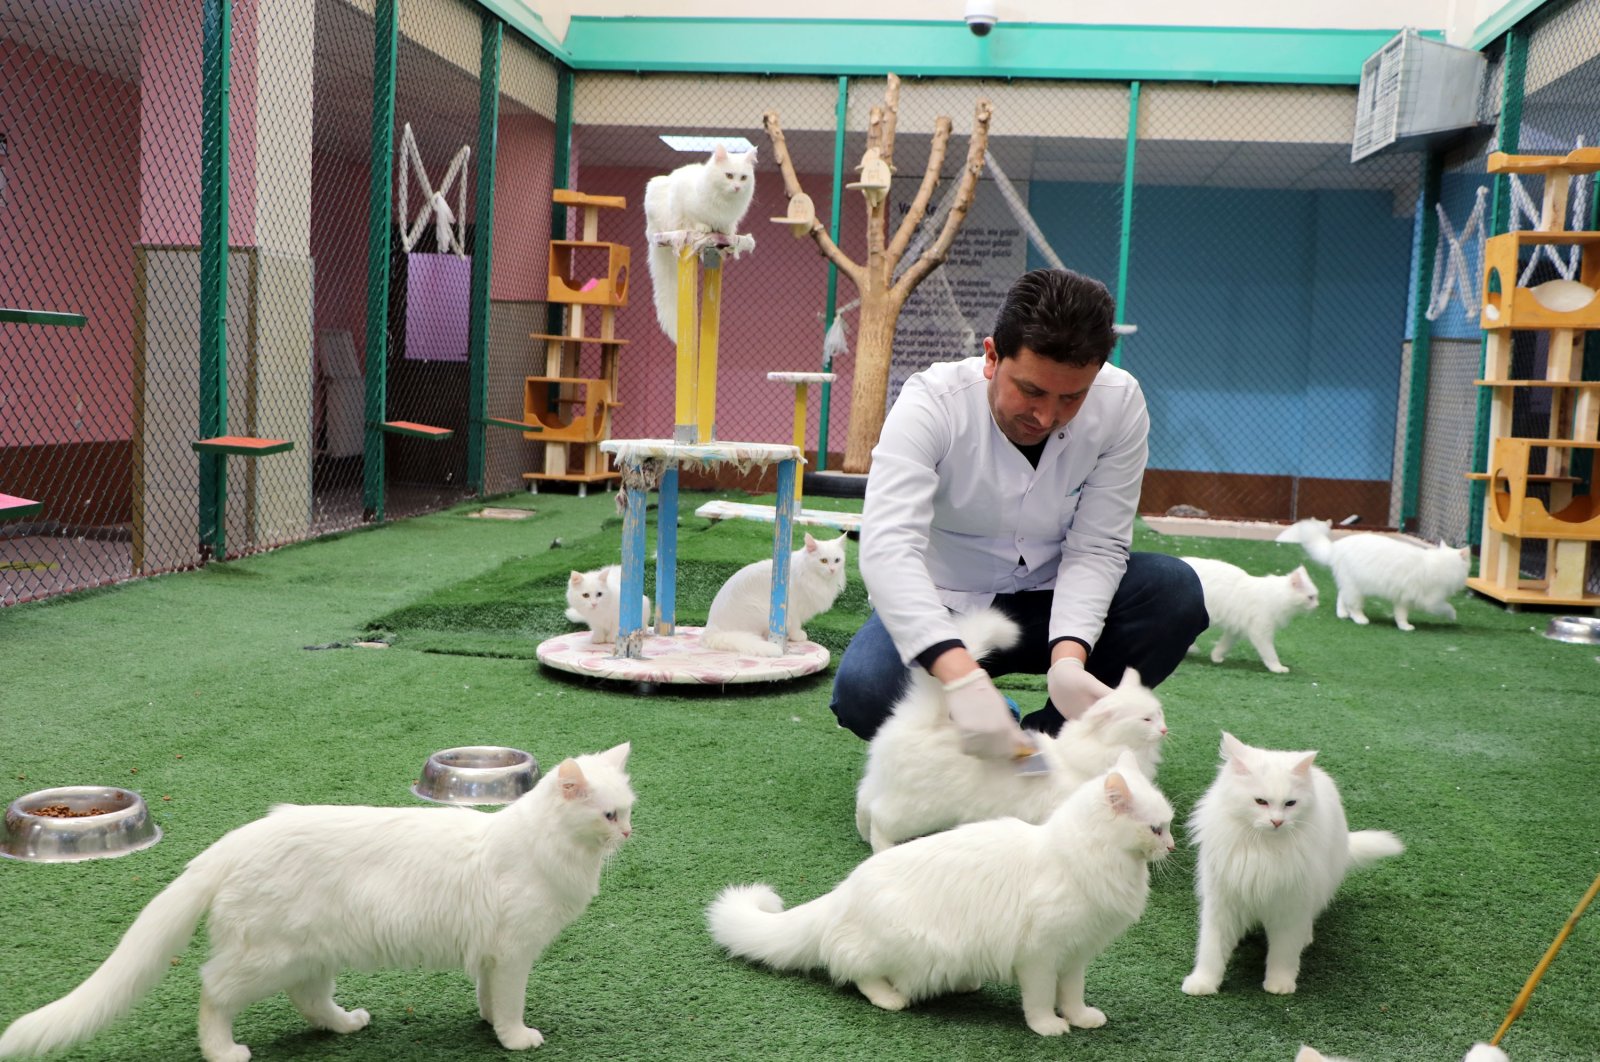 Pusat Turki memulai program pemuliaan untuk kucing Van yang dilindungi